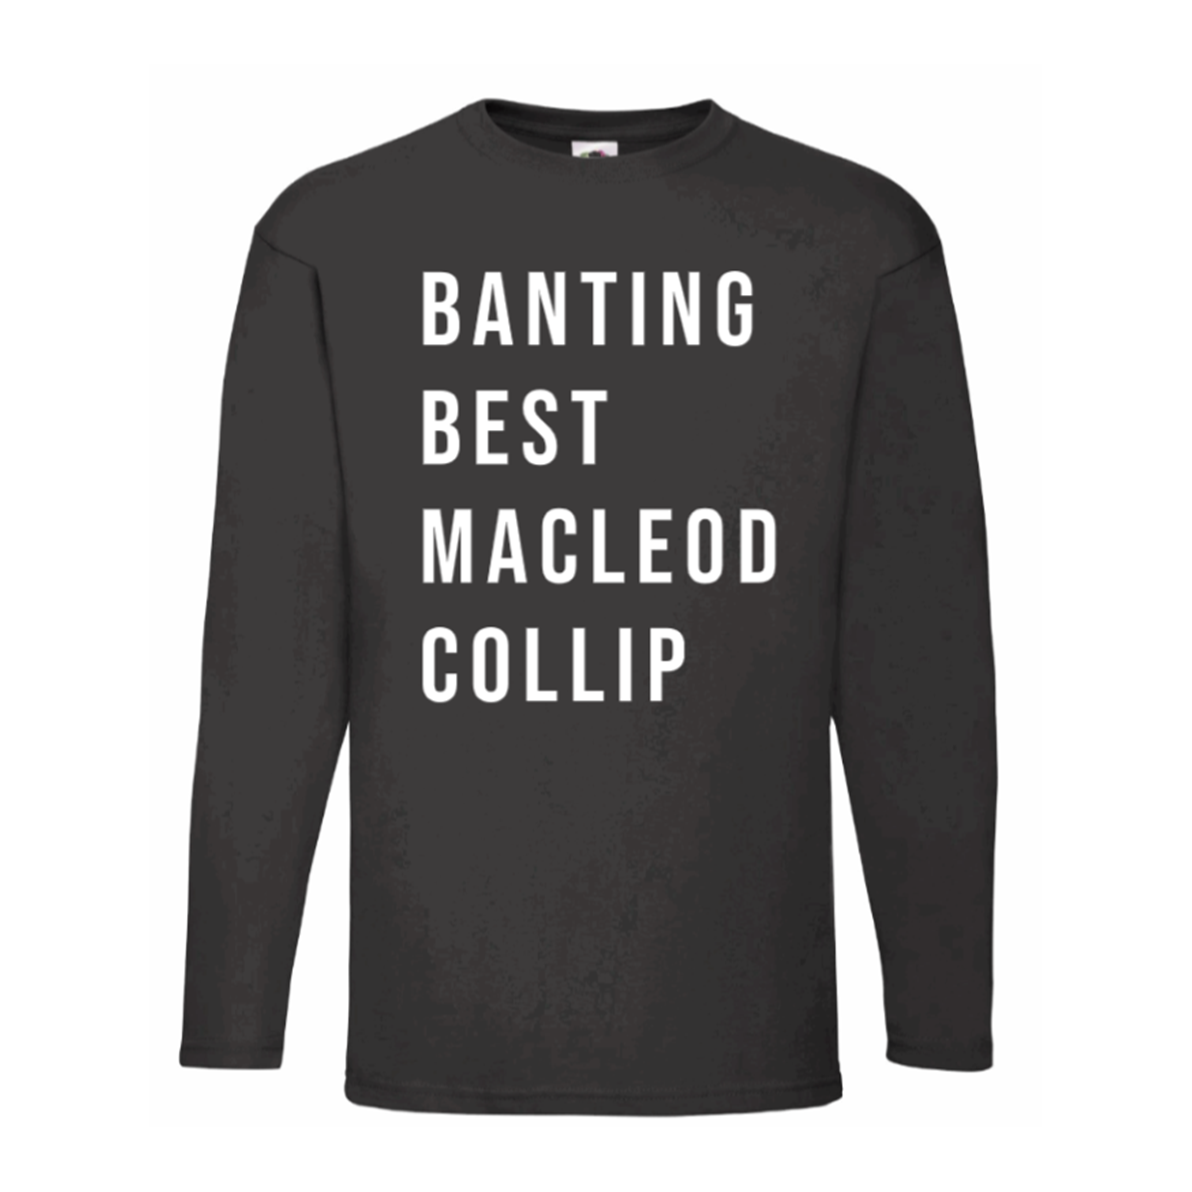 Banting, Best, Macleod & Collip Long Sleeve T Shirt